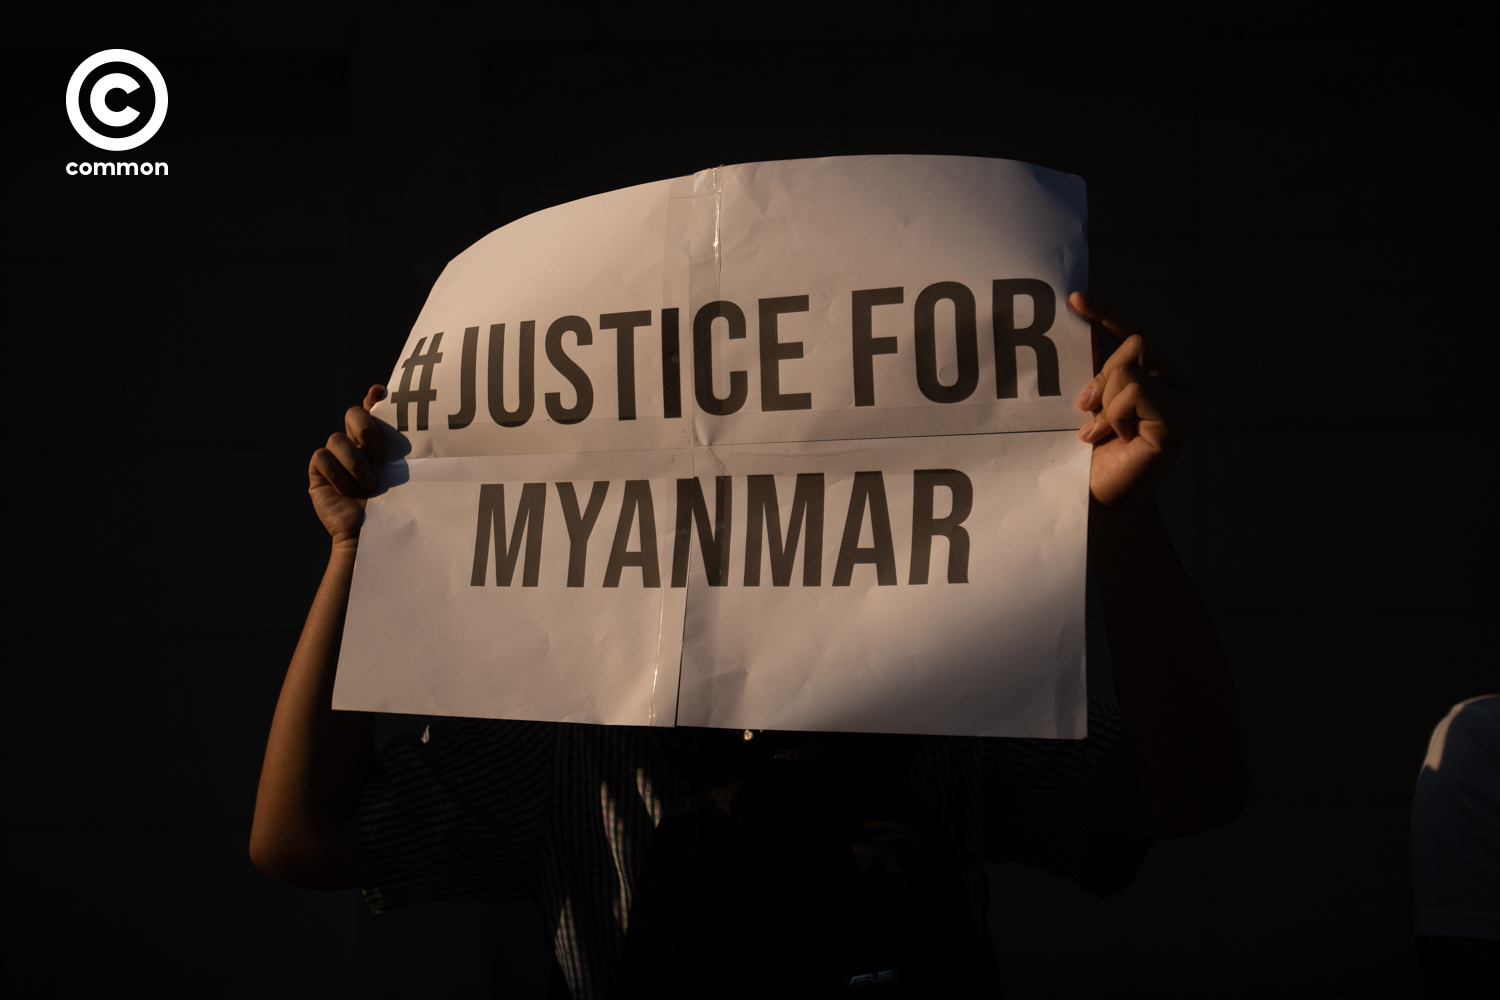 #PHOTOESSAY #SaveMyanmar #becommon